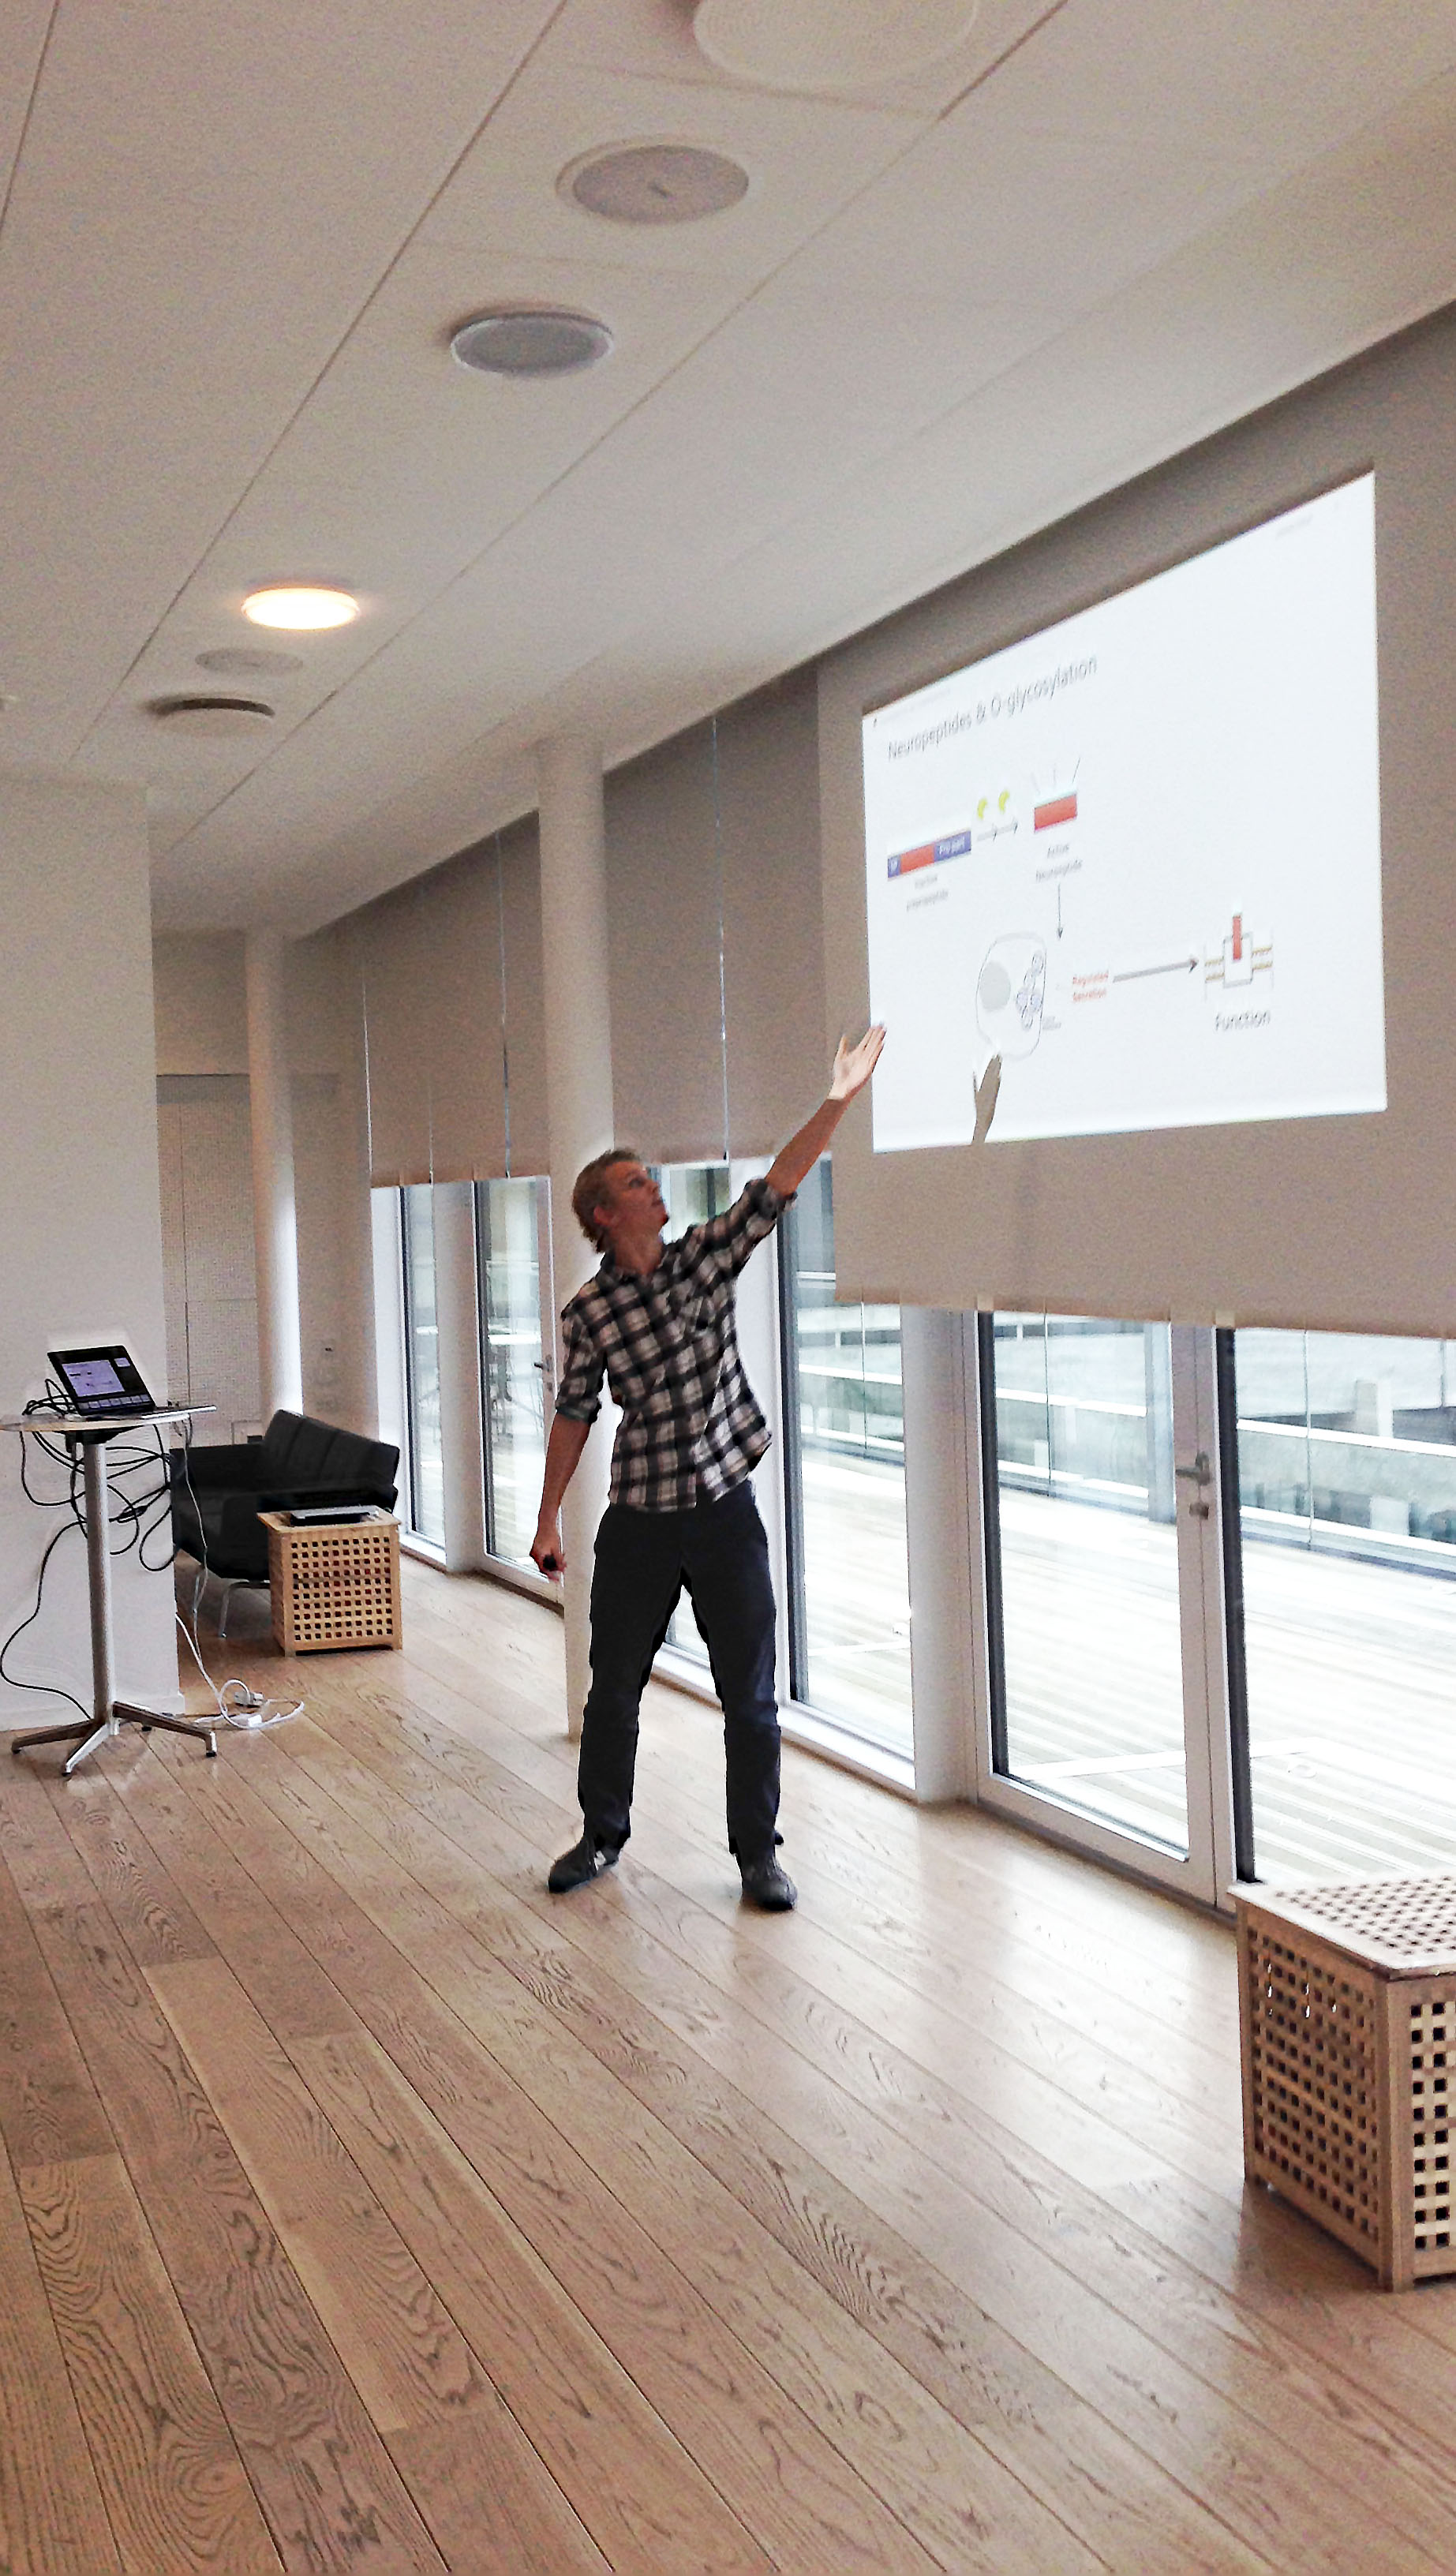 photo of CCG's master student Thomas Daugbjerg Madsen presenting at a meeting